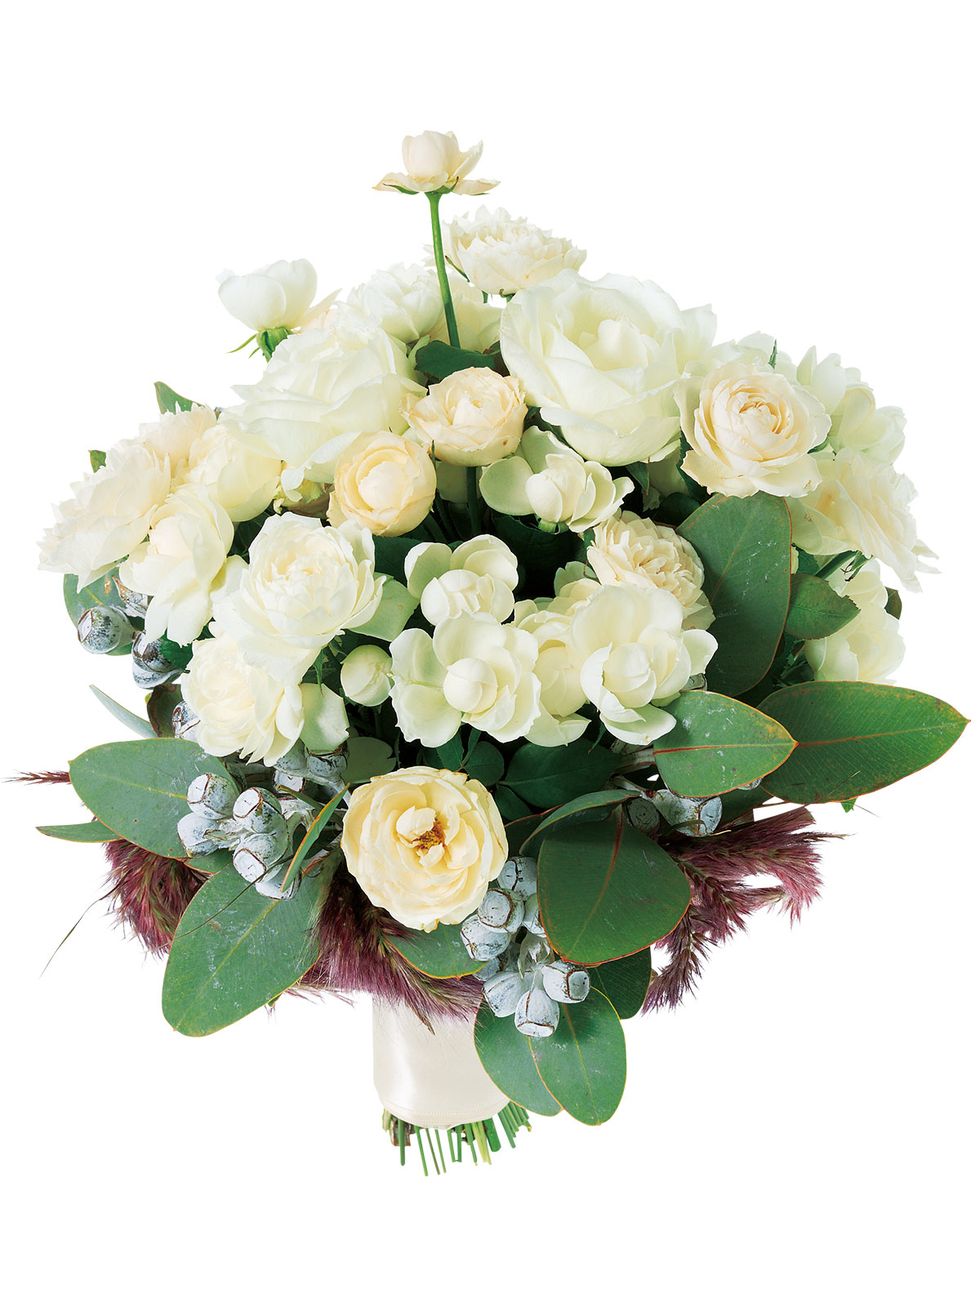 Petal, Flower, Bouquet, Cut flowers, Flowering plant, Botany, Rose family, Garden roses, Flower Arranging, Rose order, 